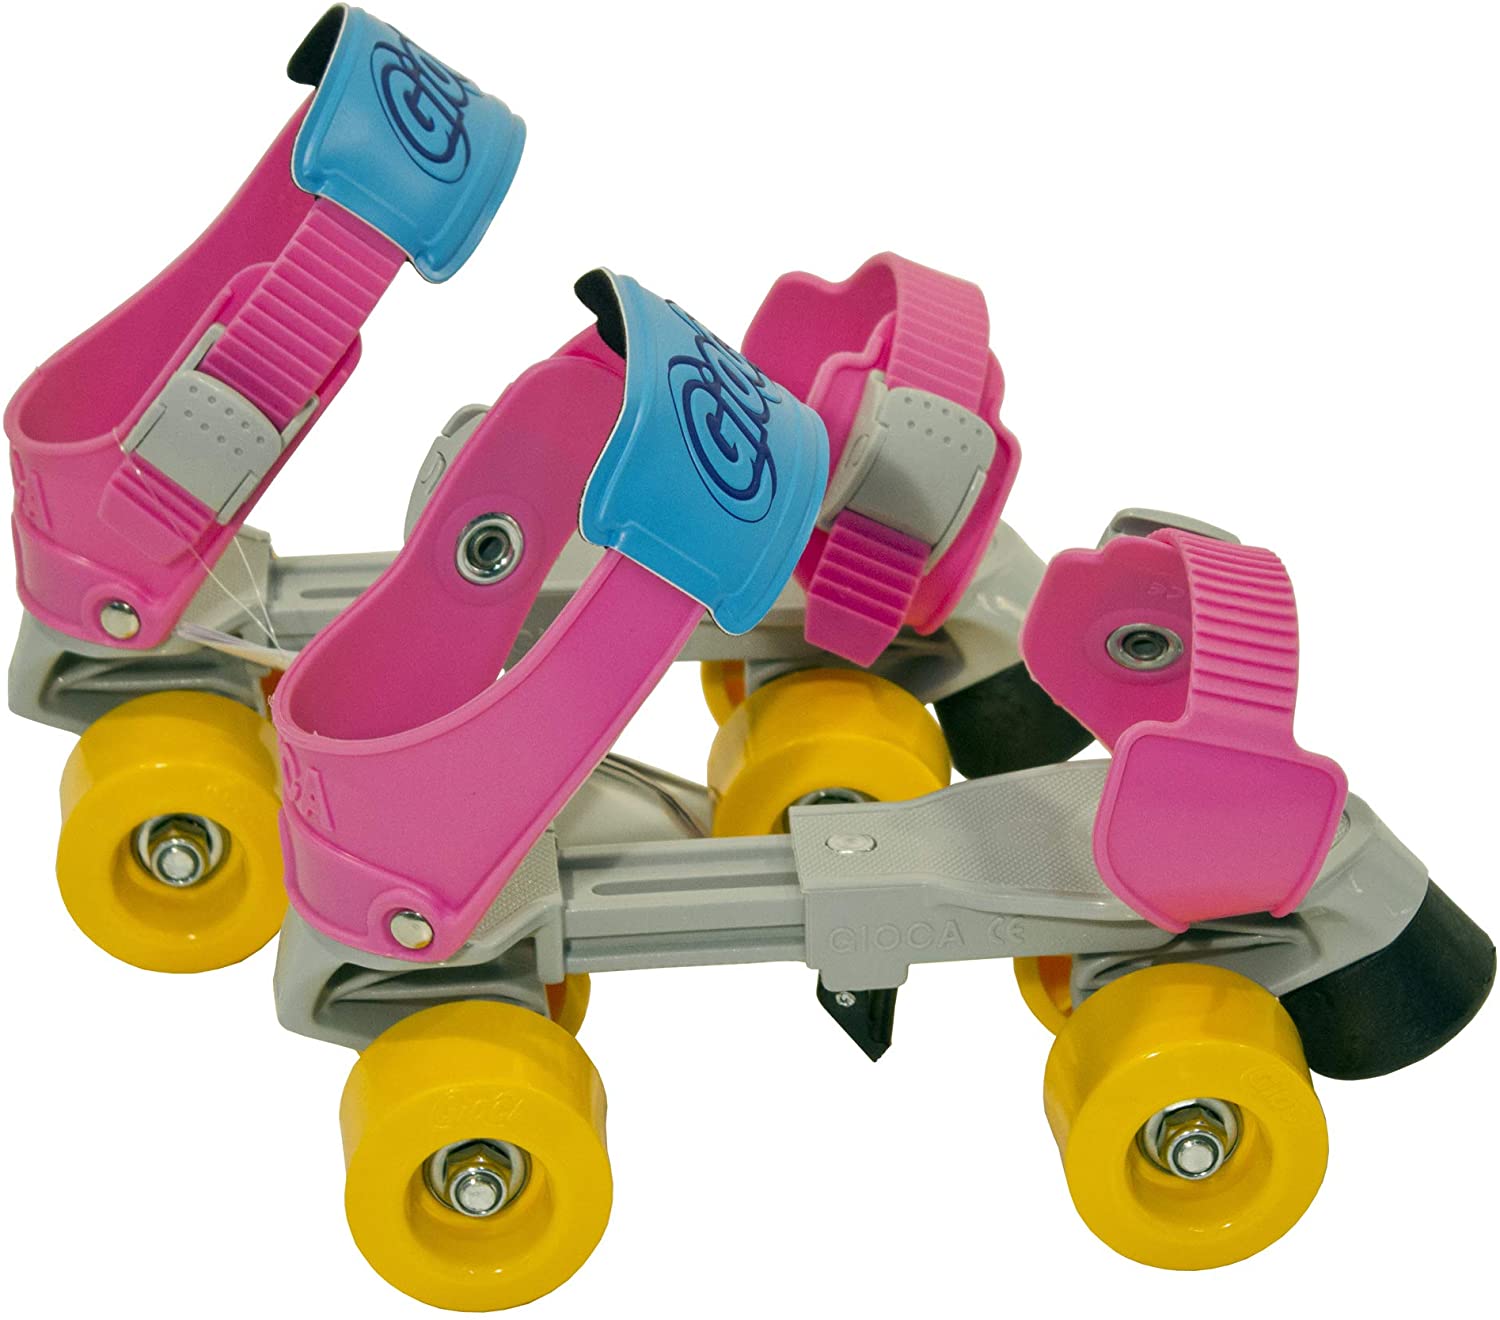 Ролики-квады Gioca MiniJet розовые  